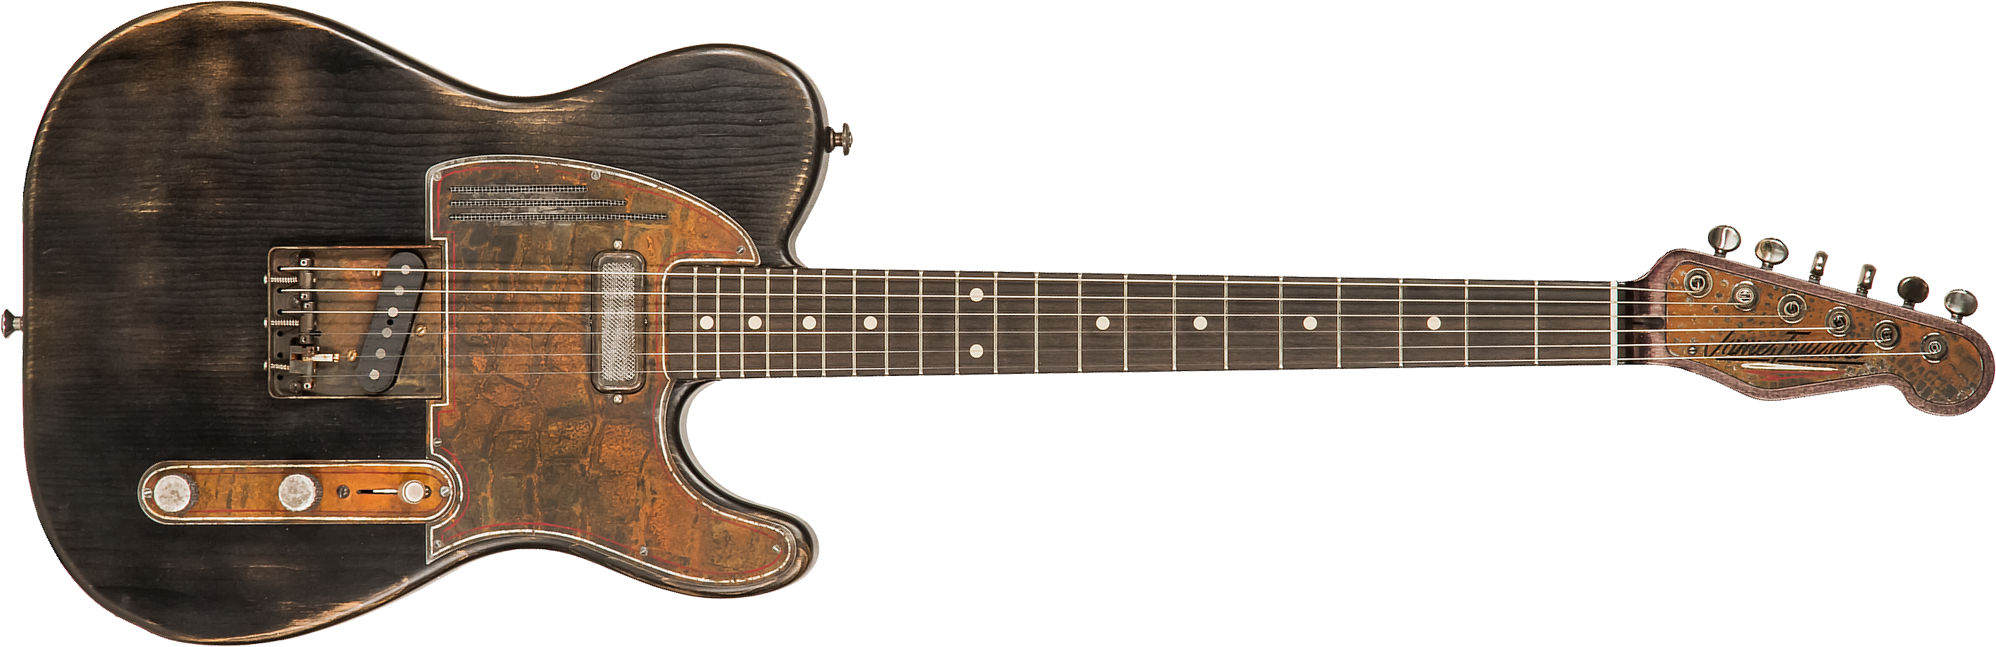 James Trussart Steelguardcaster Glaser B Bender Sh Ht Eb #21062 - Rust O Matic Pinstriped Black Nitro - Guitarra eléctrica con forma de tel - Main pic